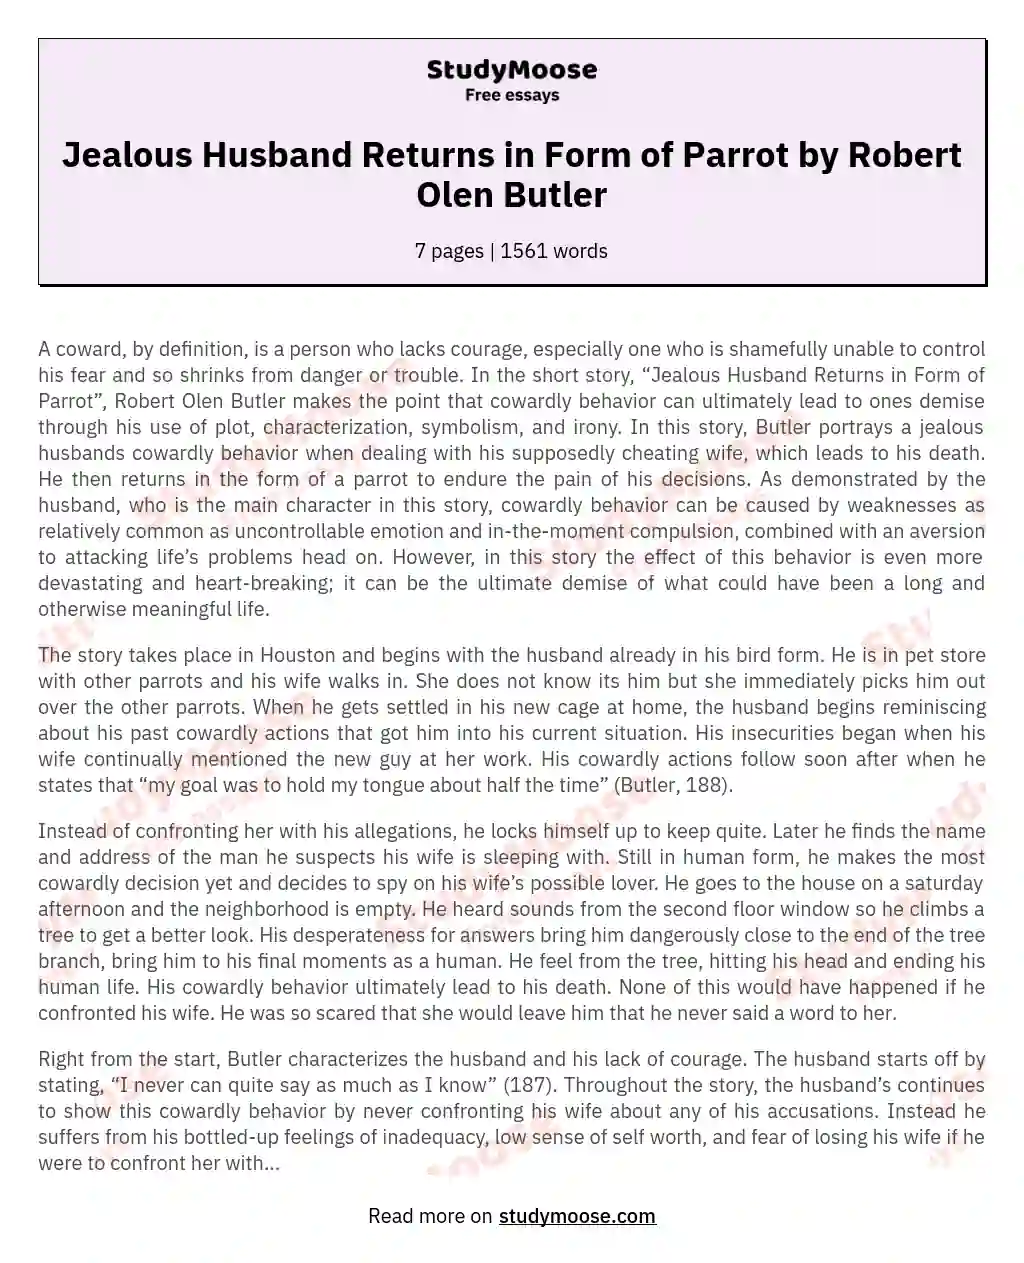 Jealous Husband Returns in Form of Parrot by Robert Olen Butler essay